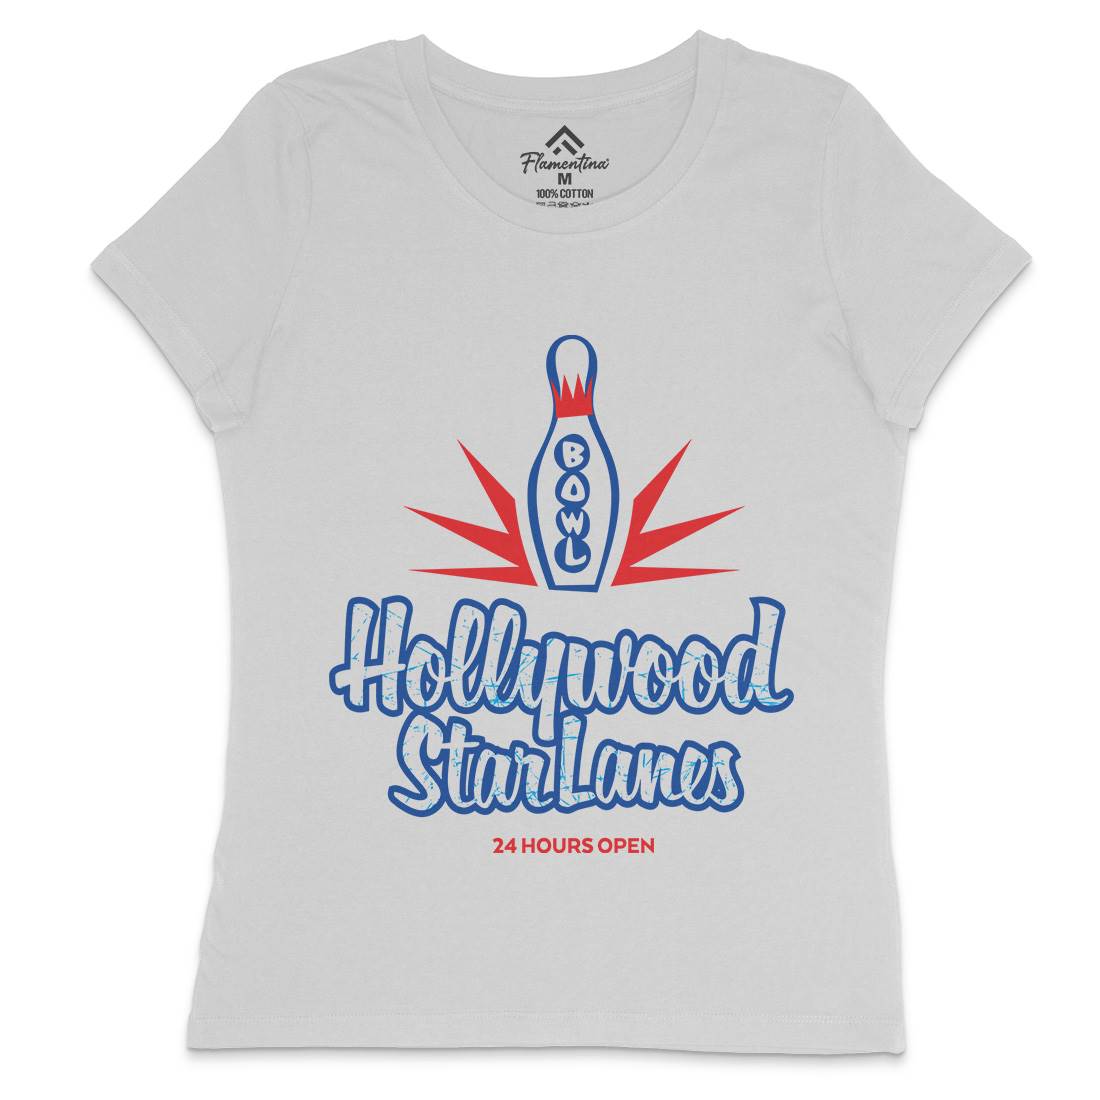 Hollywood Star Lanes Womens Crew Neck T-Shirt Sport D359